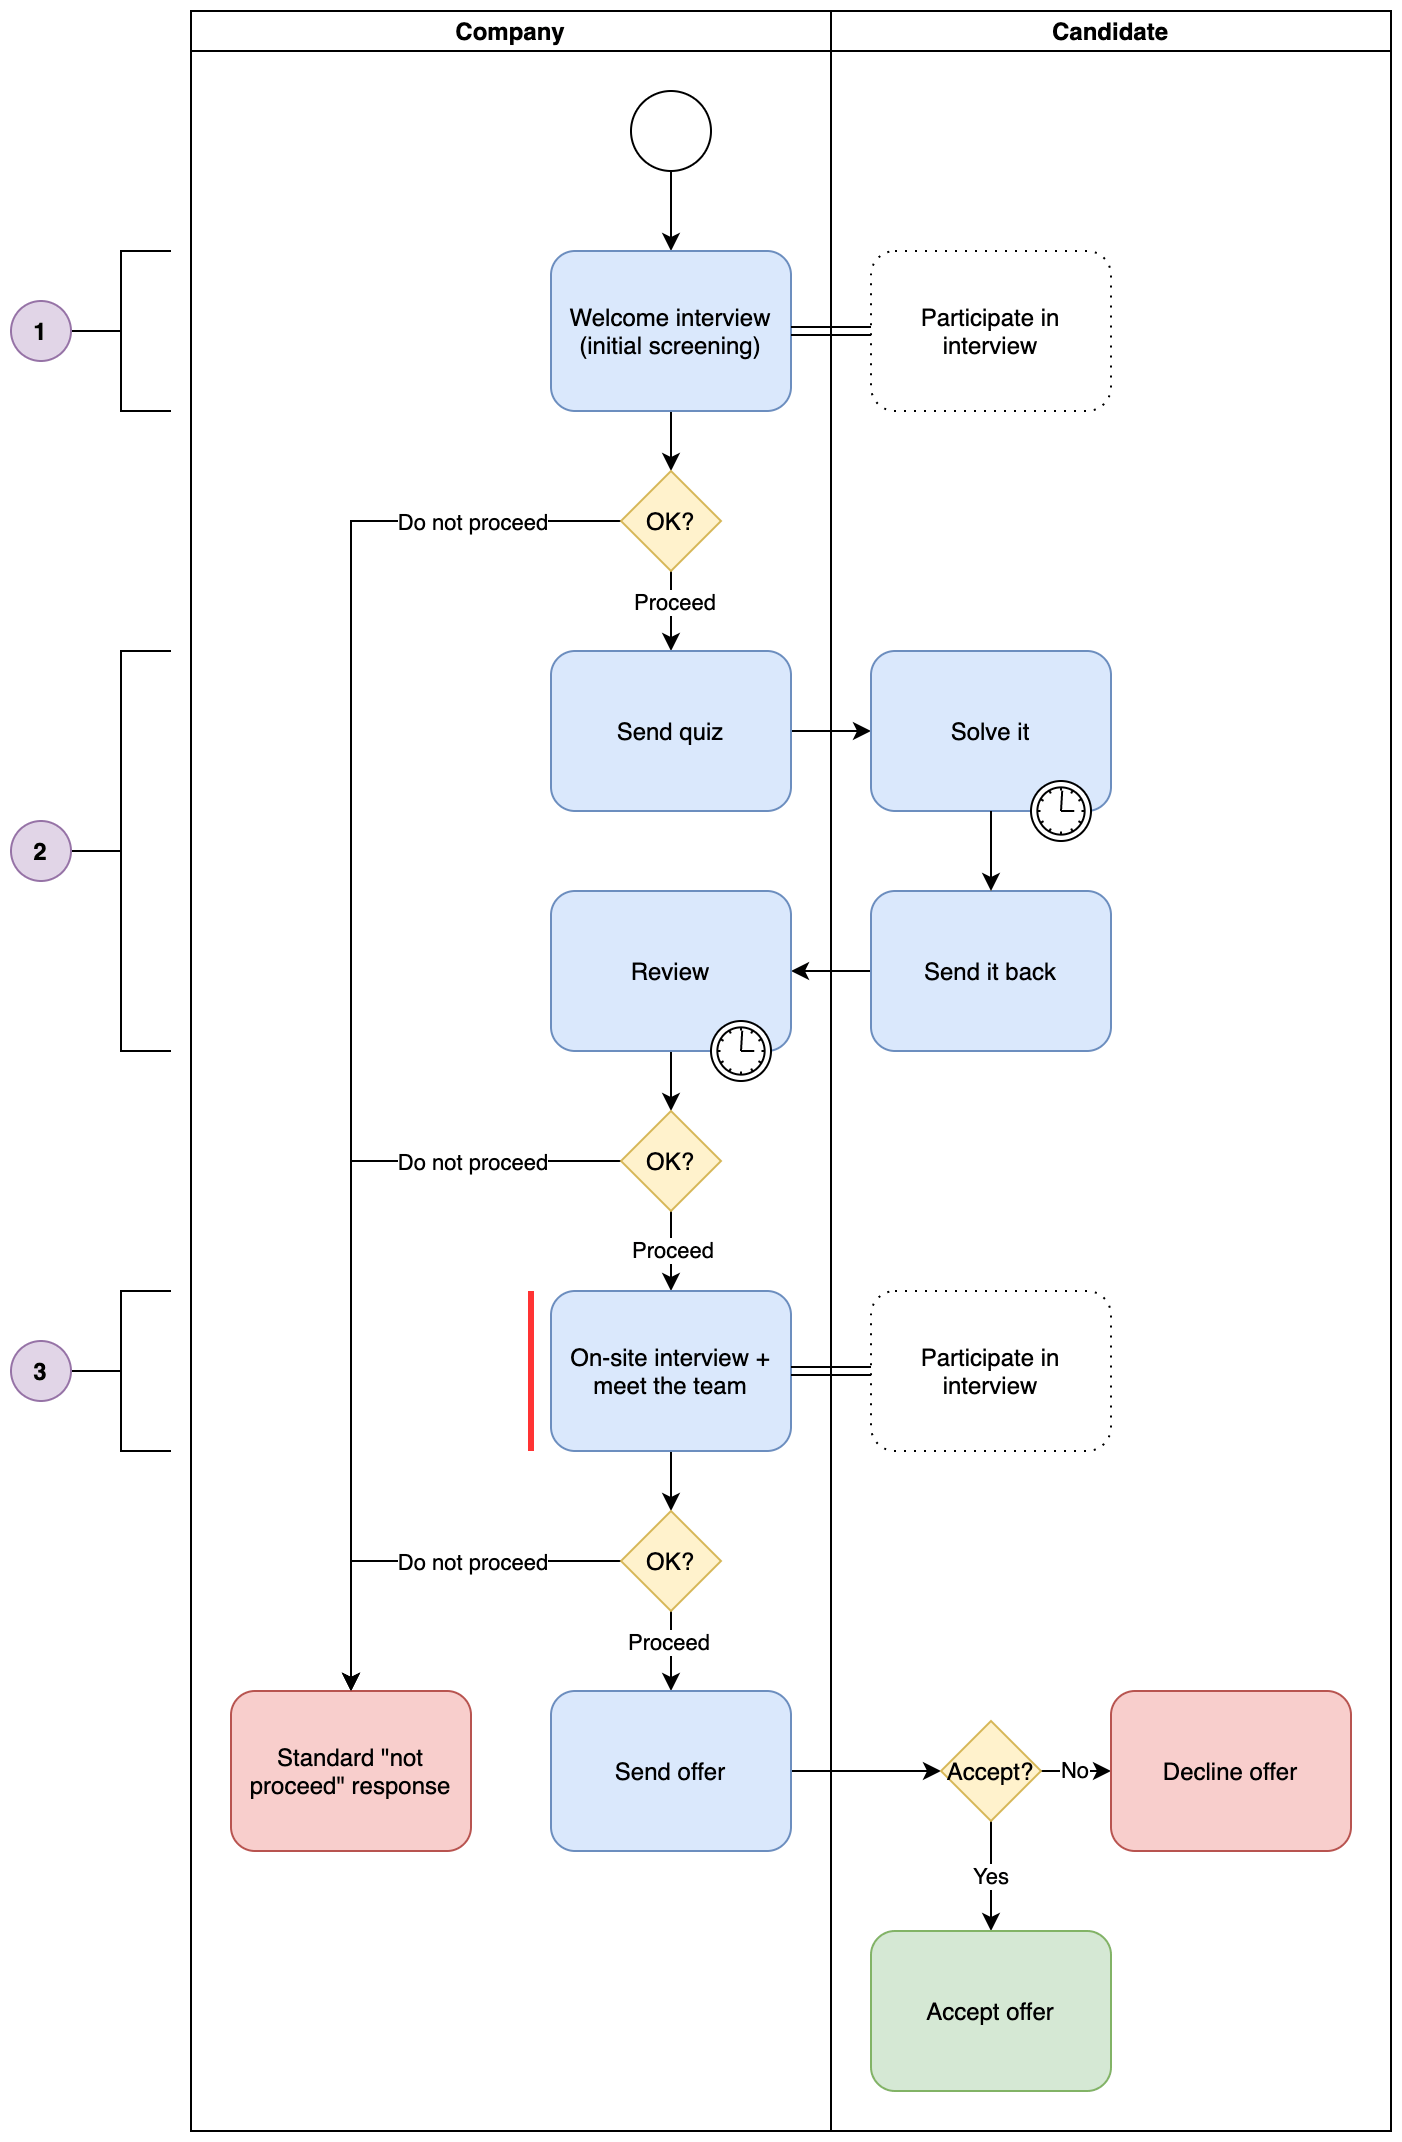 2.1. Process graph